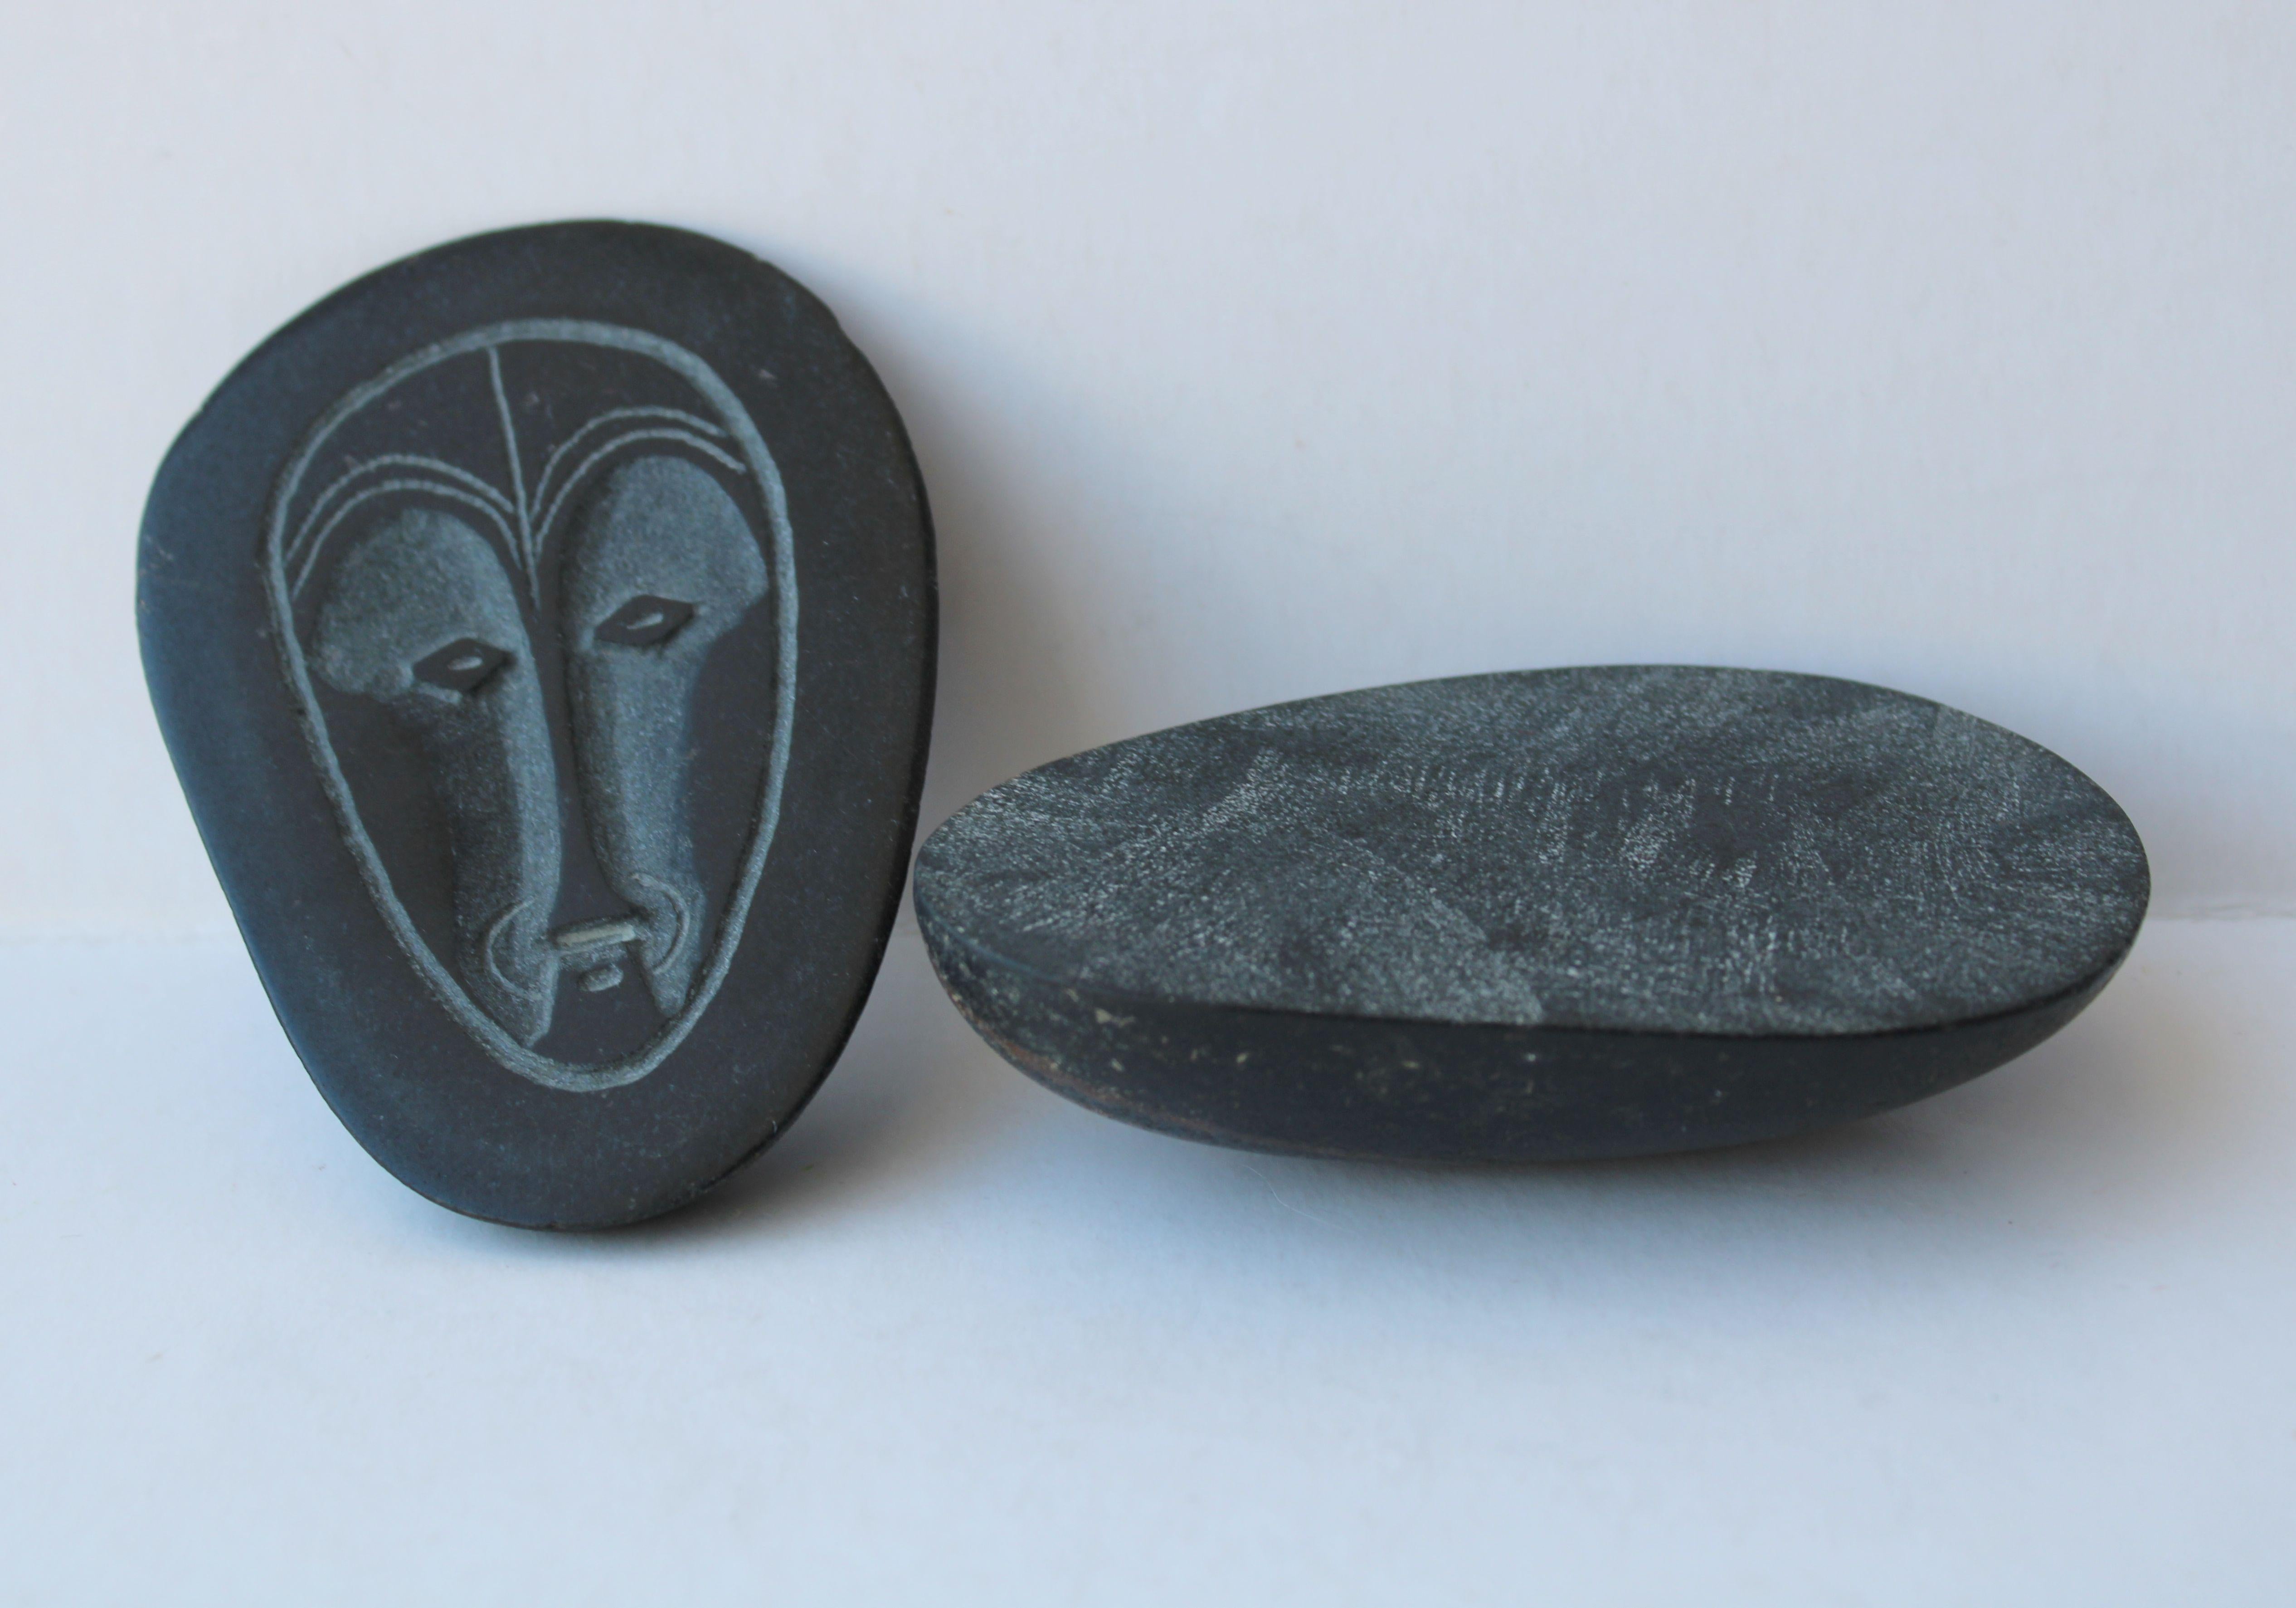 Zane Elerte (1987) StoneGod

Medal, brushed, polished granite, 75x11x40 mm 

